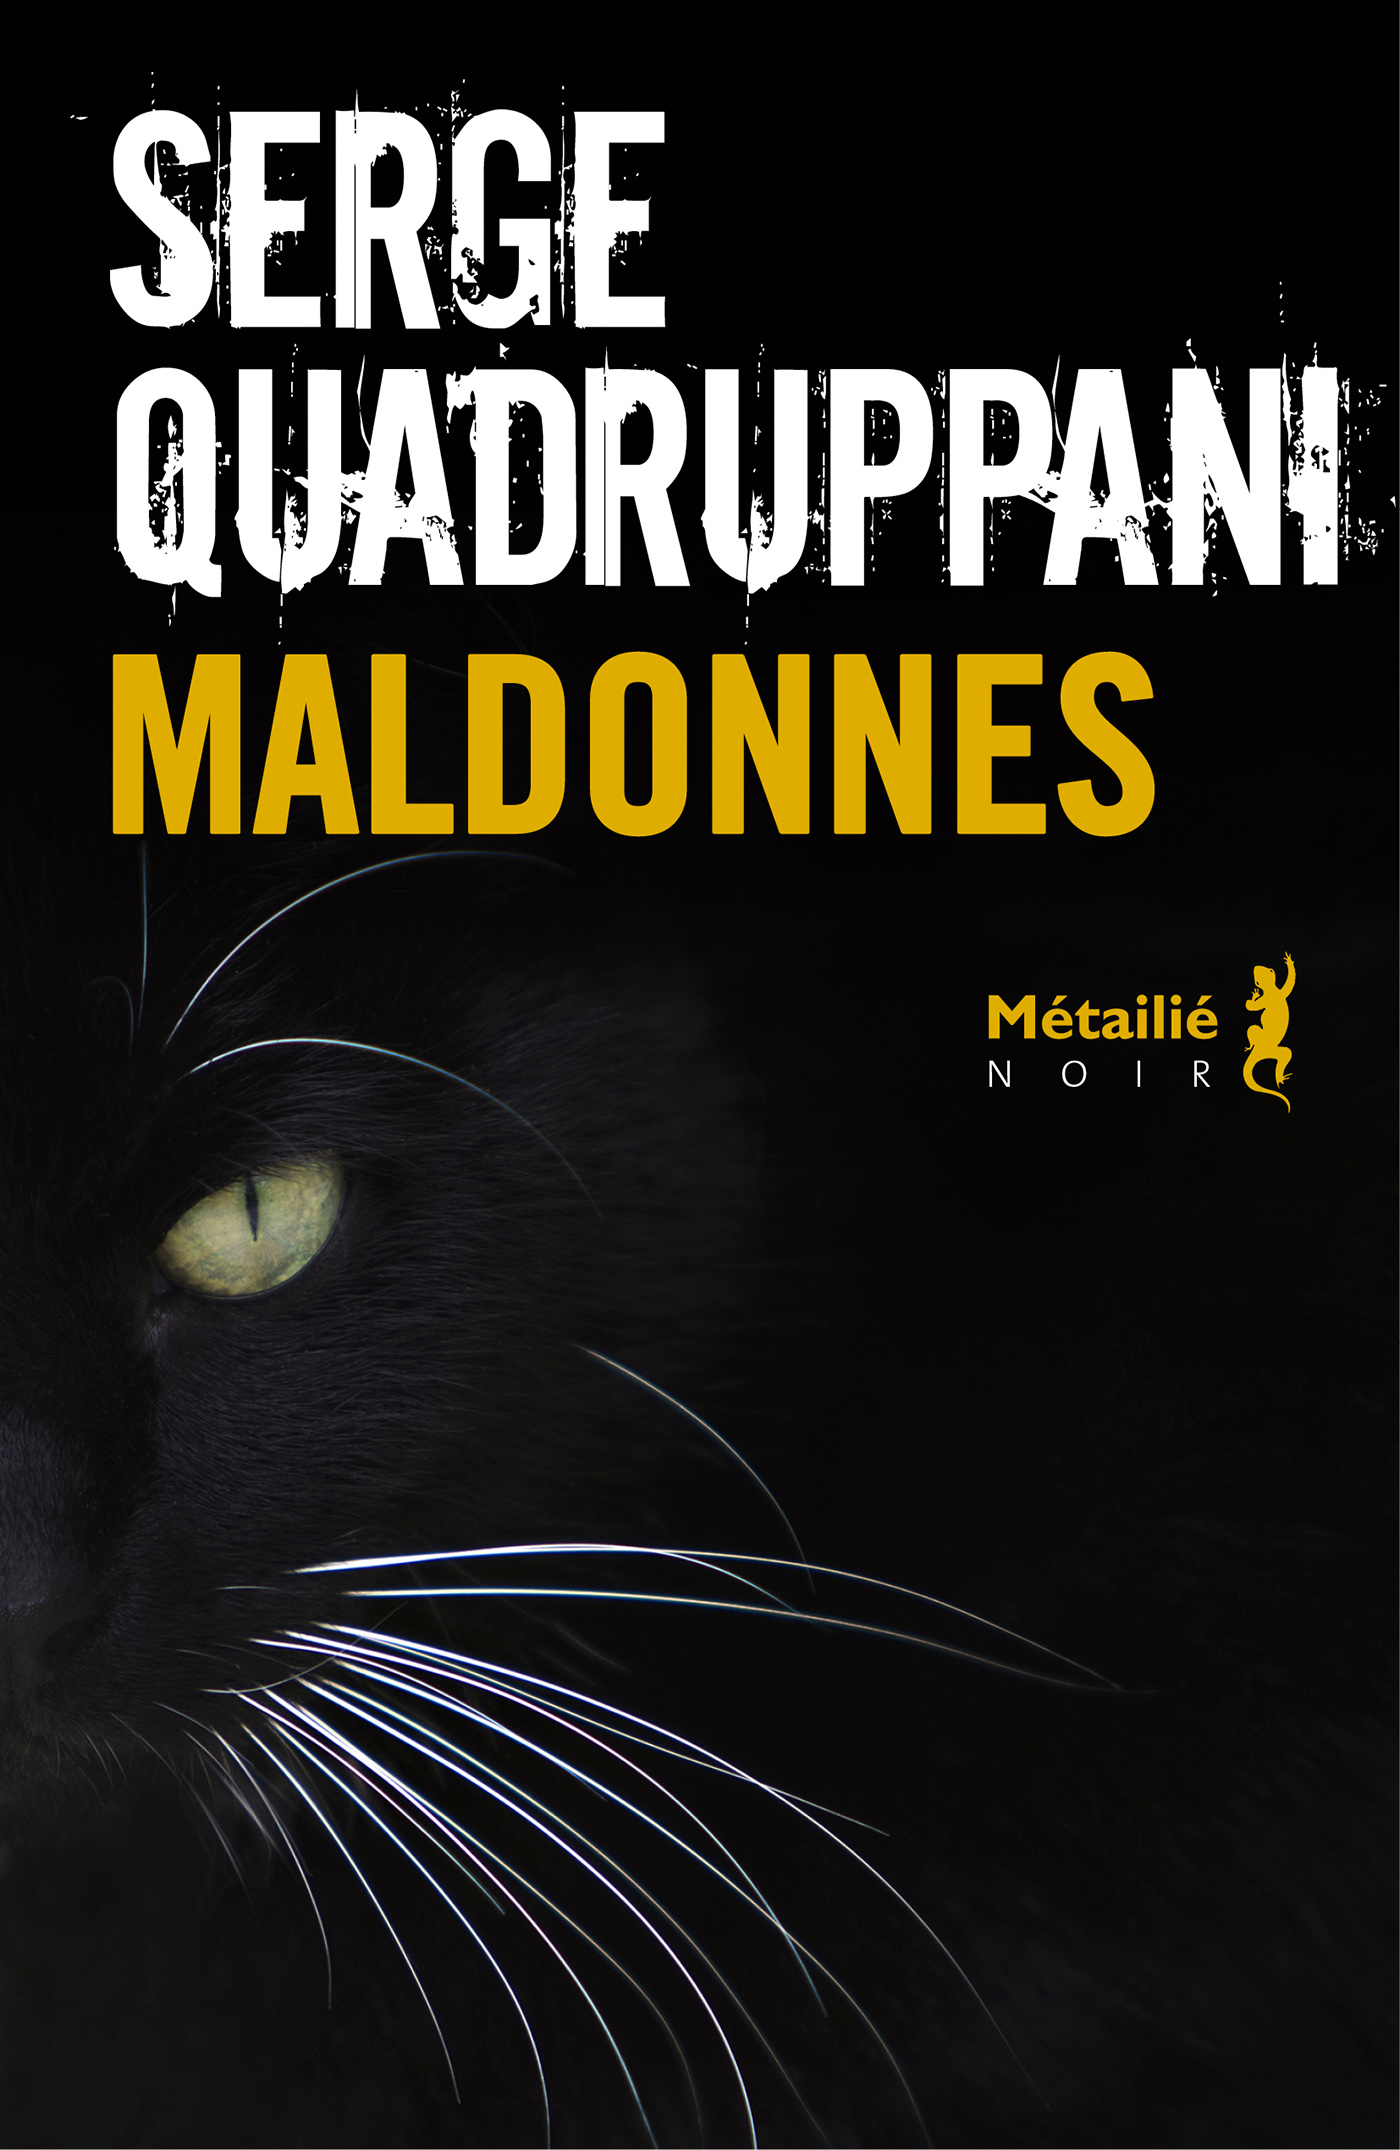 Afficher "Maldonnes"